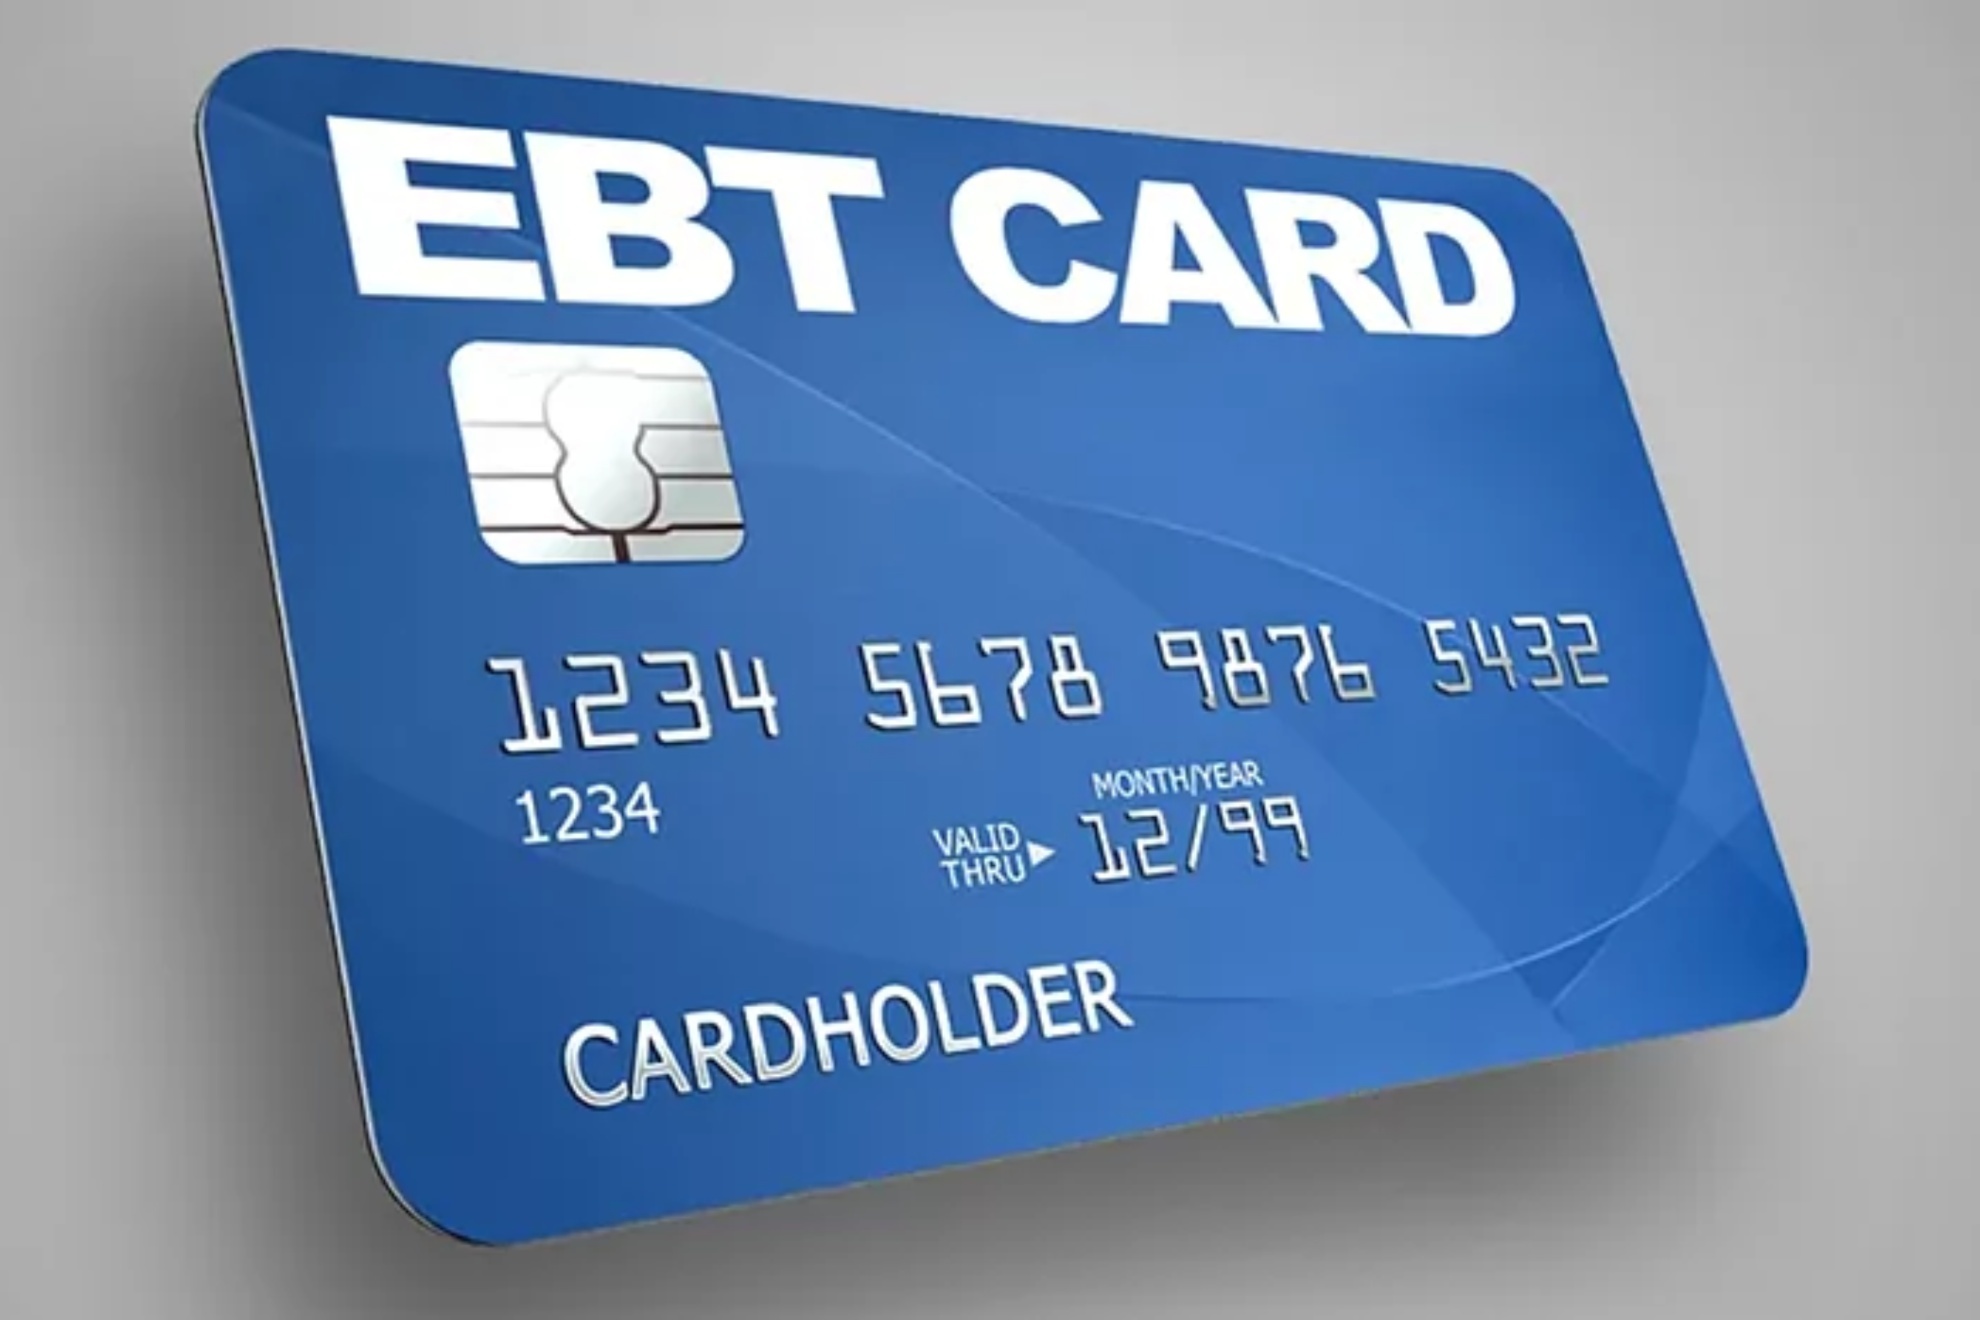 Electronic Benefits Transfer (EBT) card.